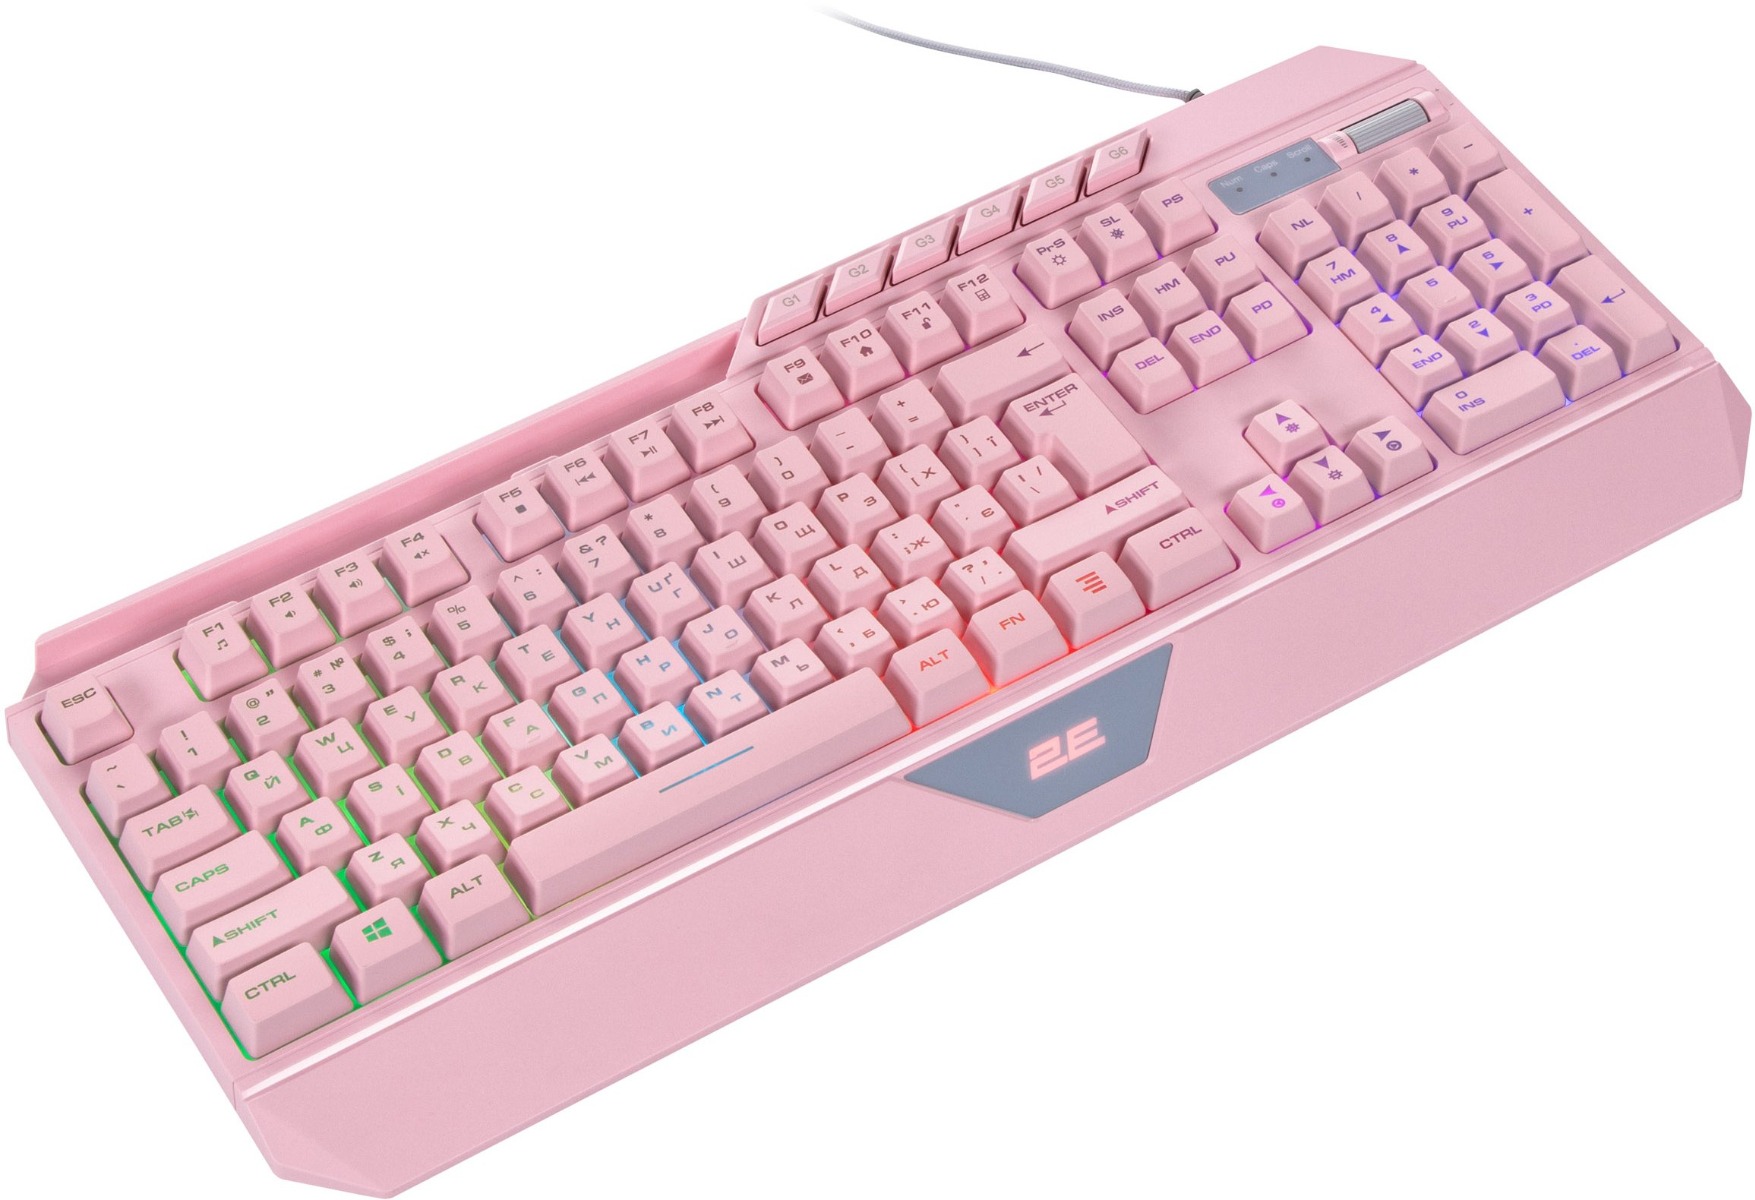 IT/kbrd Клавиатура 2E Gaming KG315 RGB USB Pink (2E-KG315UPK)